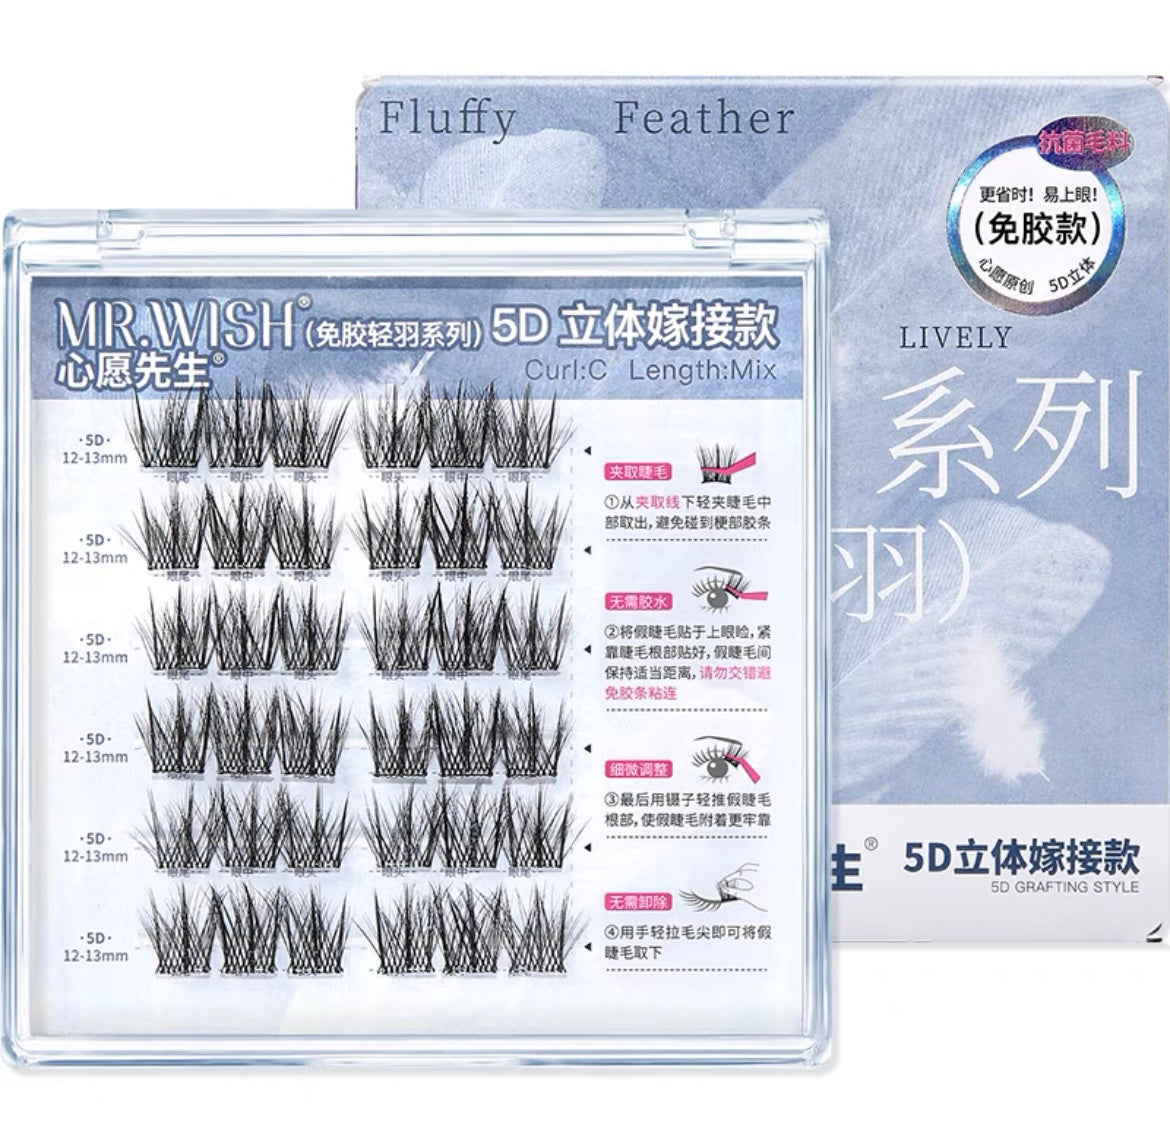 MR.WISH 5D Fluffy Feather Series Glue-Free/Glue-on Self-Adhesive False Eyelashes 1 Box 心愿先生5D立体轻羽系列假睫毛